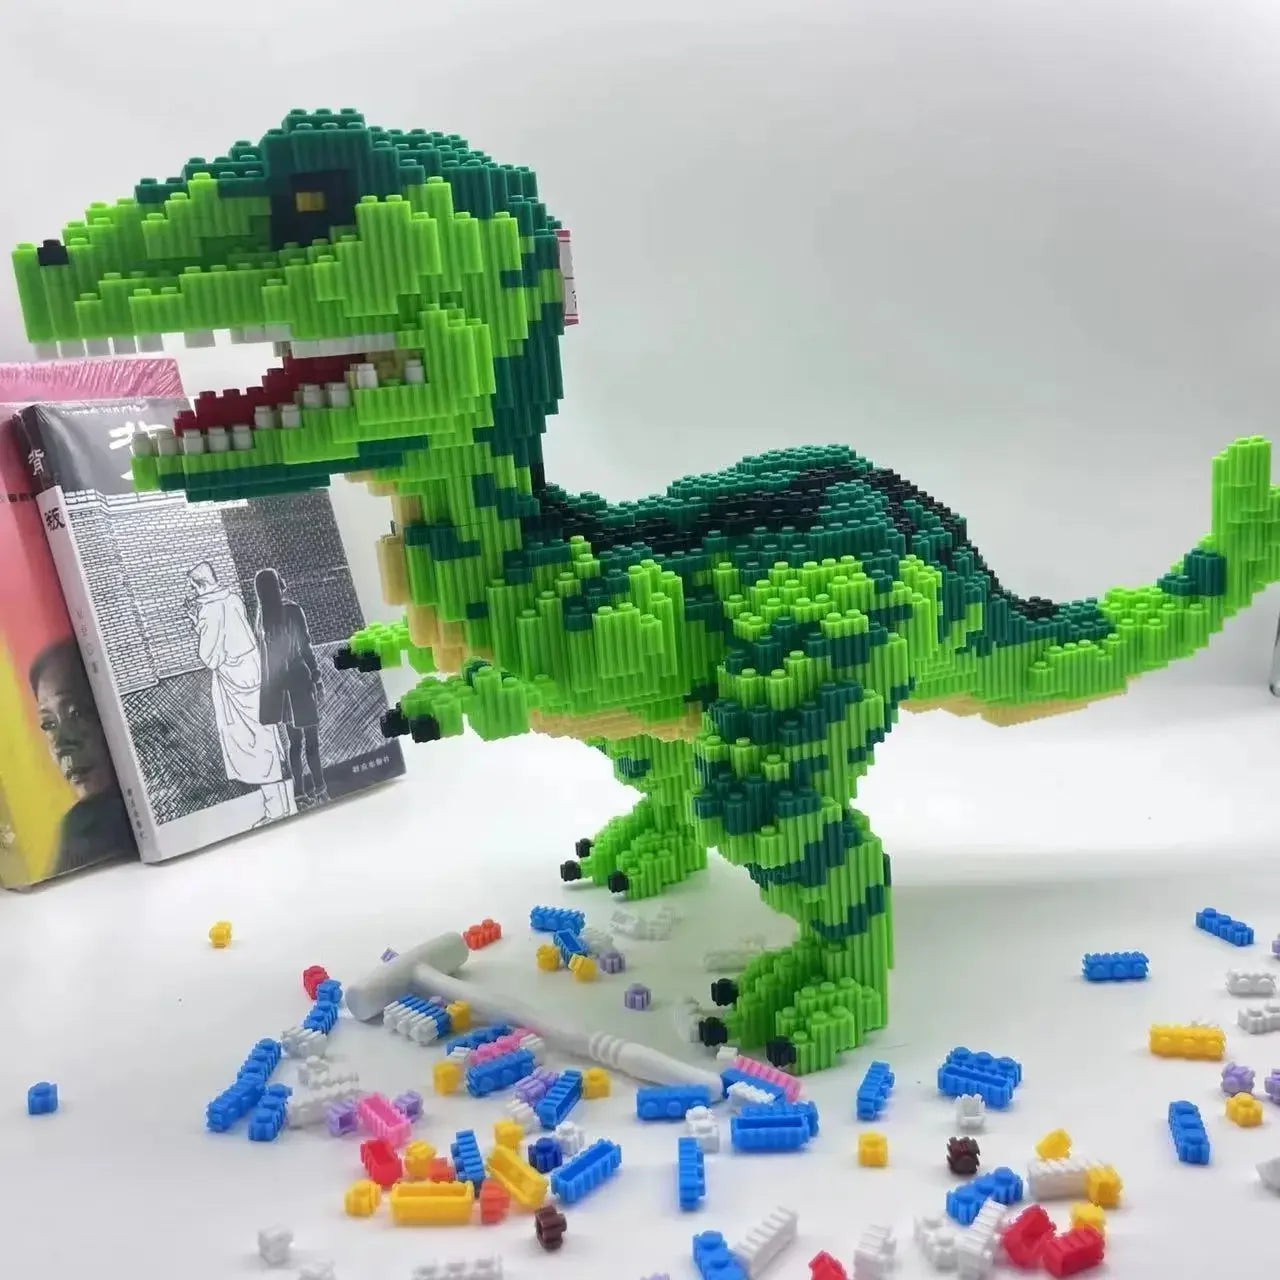 Giant Tyrannosaurus Rex Dinosaur Building Blocks Toy Without Original Packaging Box